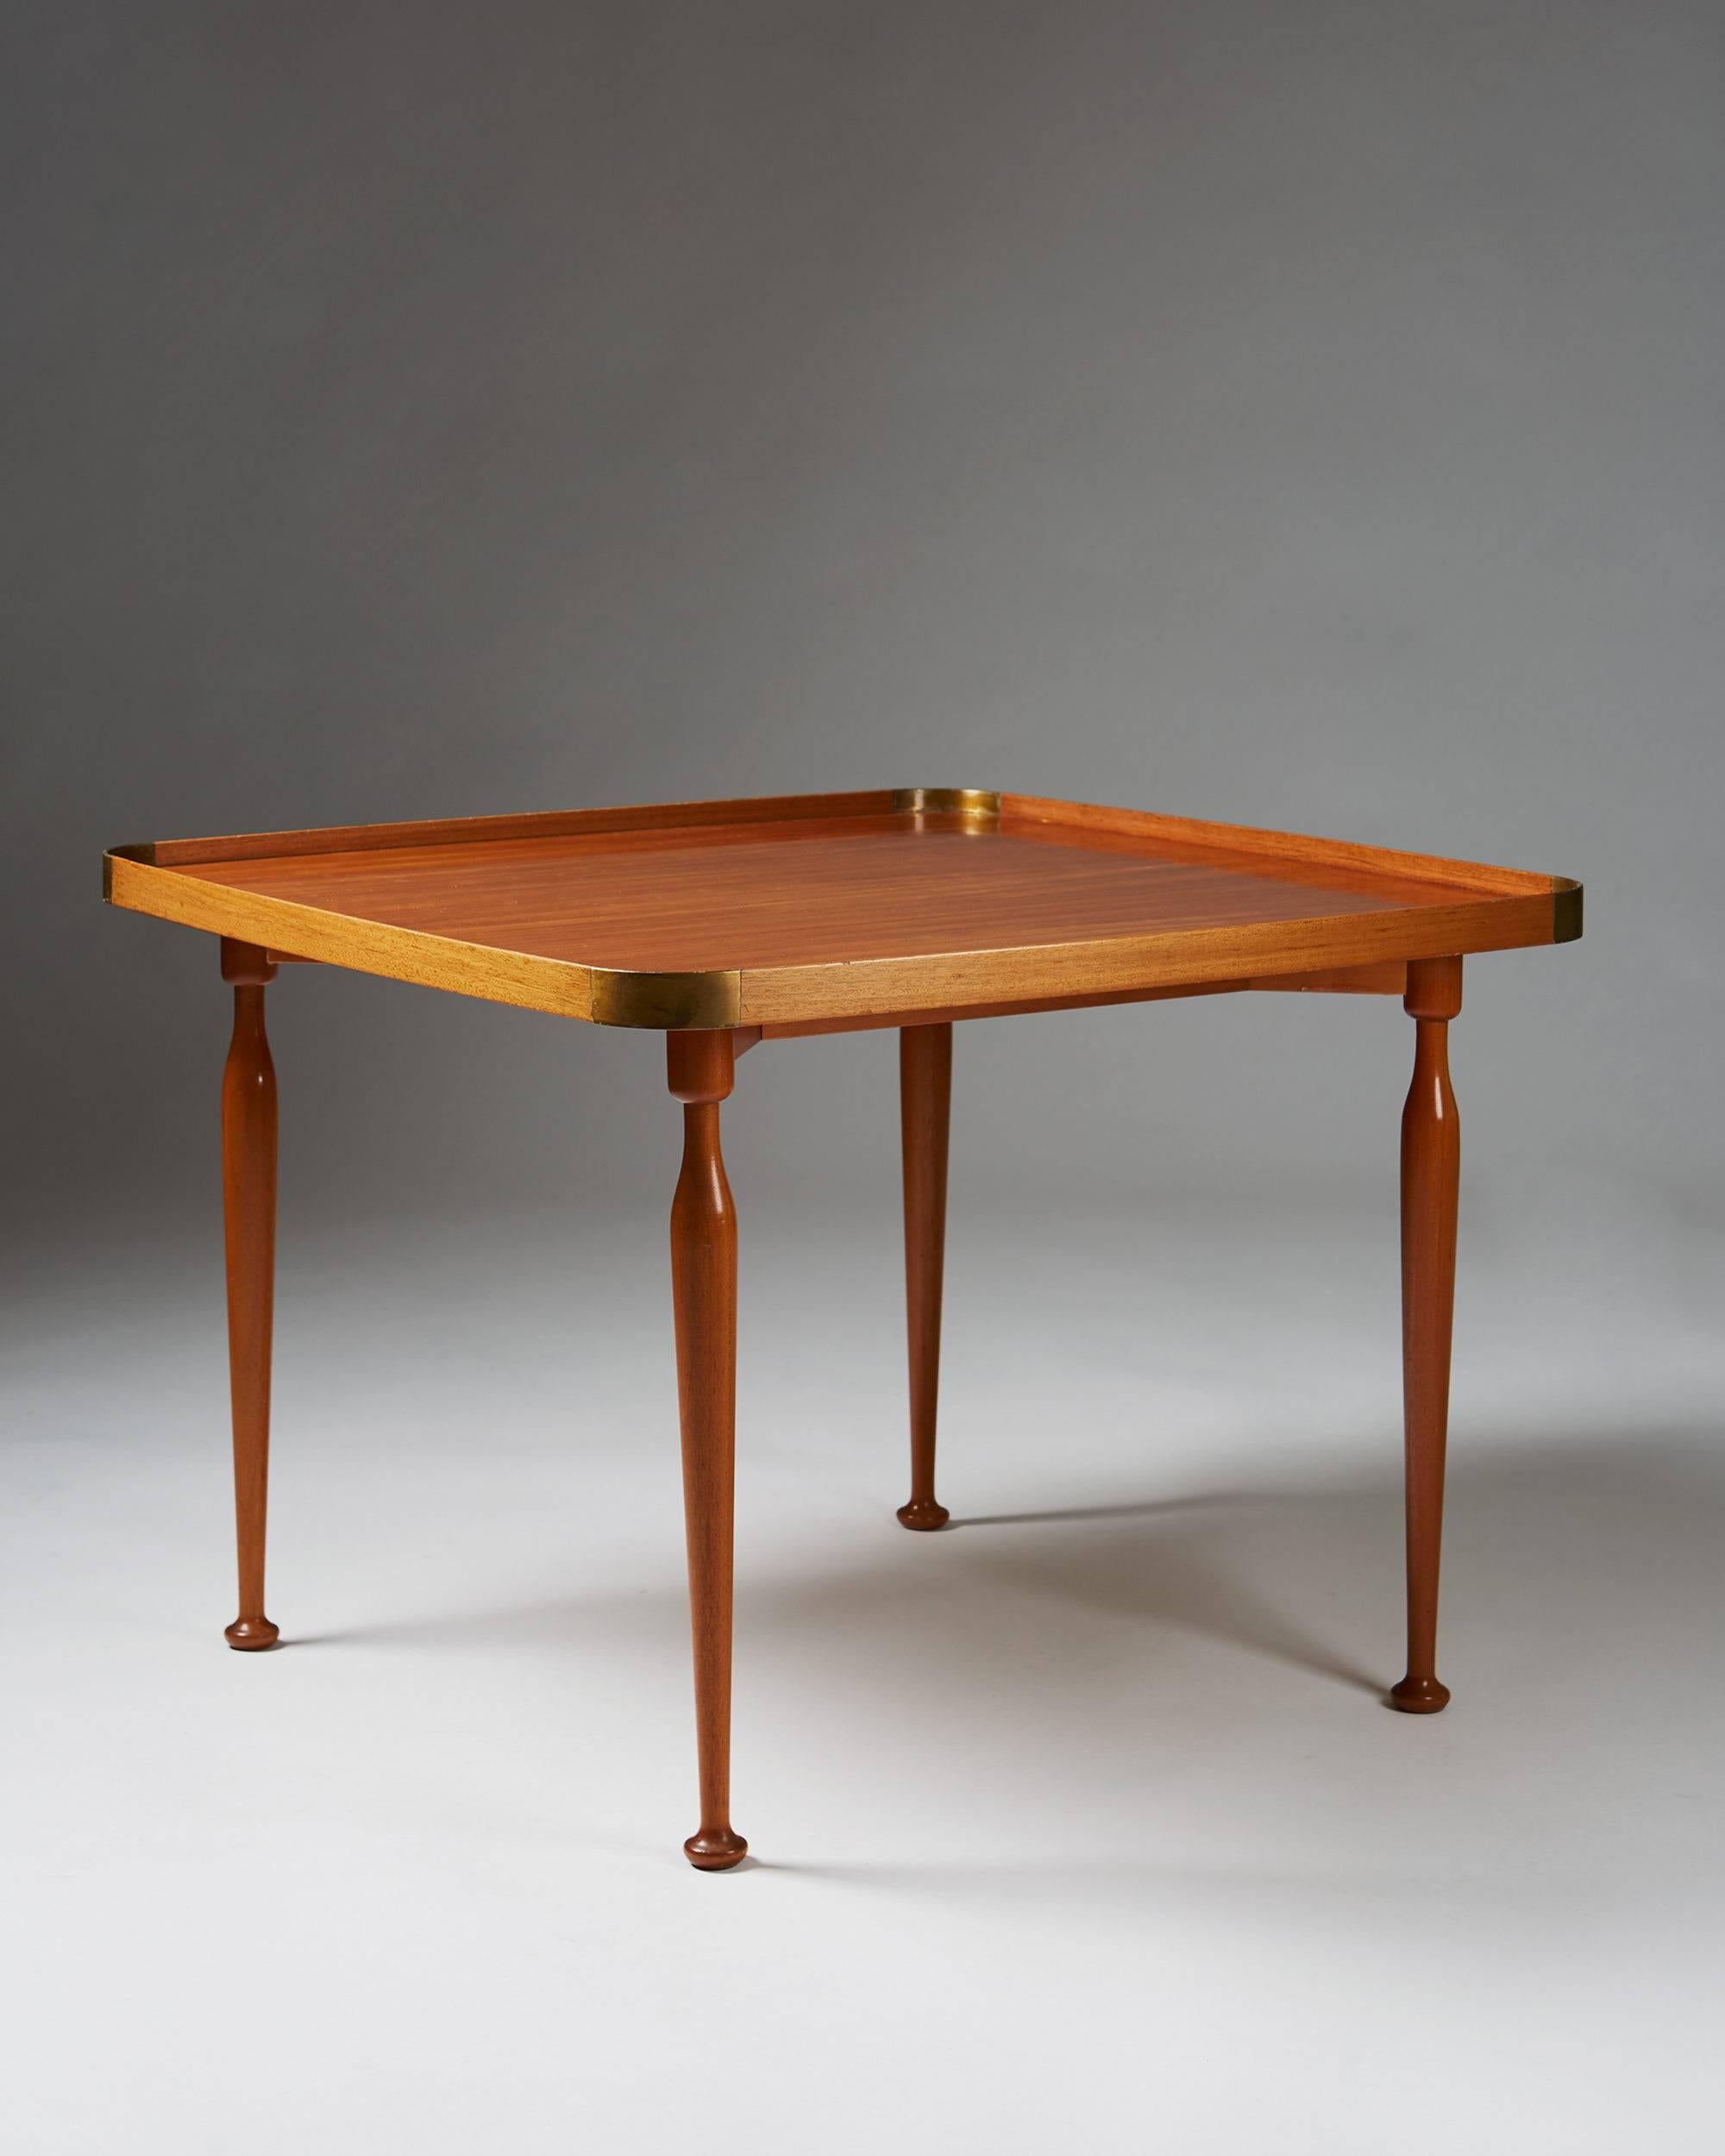 Occasional table model 1074 designed by Josef Frank for Svenskt Tenn, Sweden, 1950s.
Mahogany and brass.